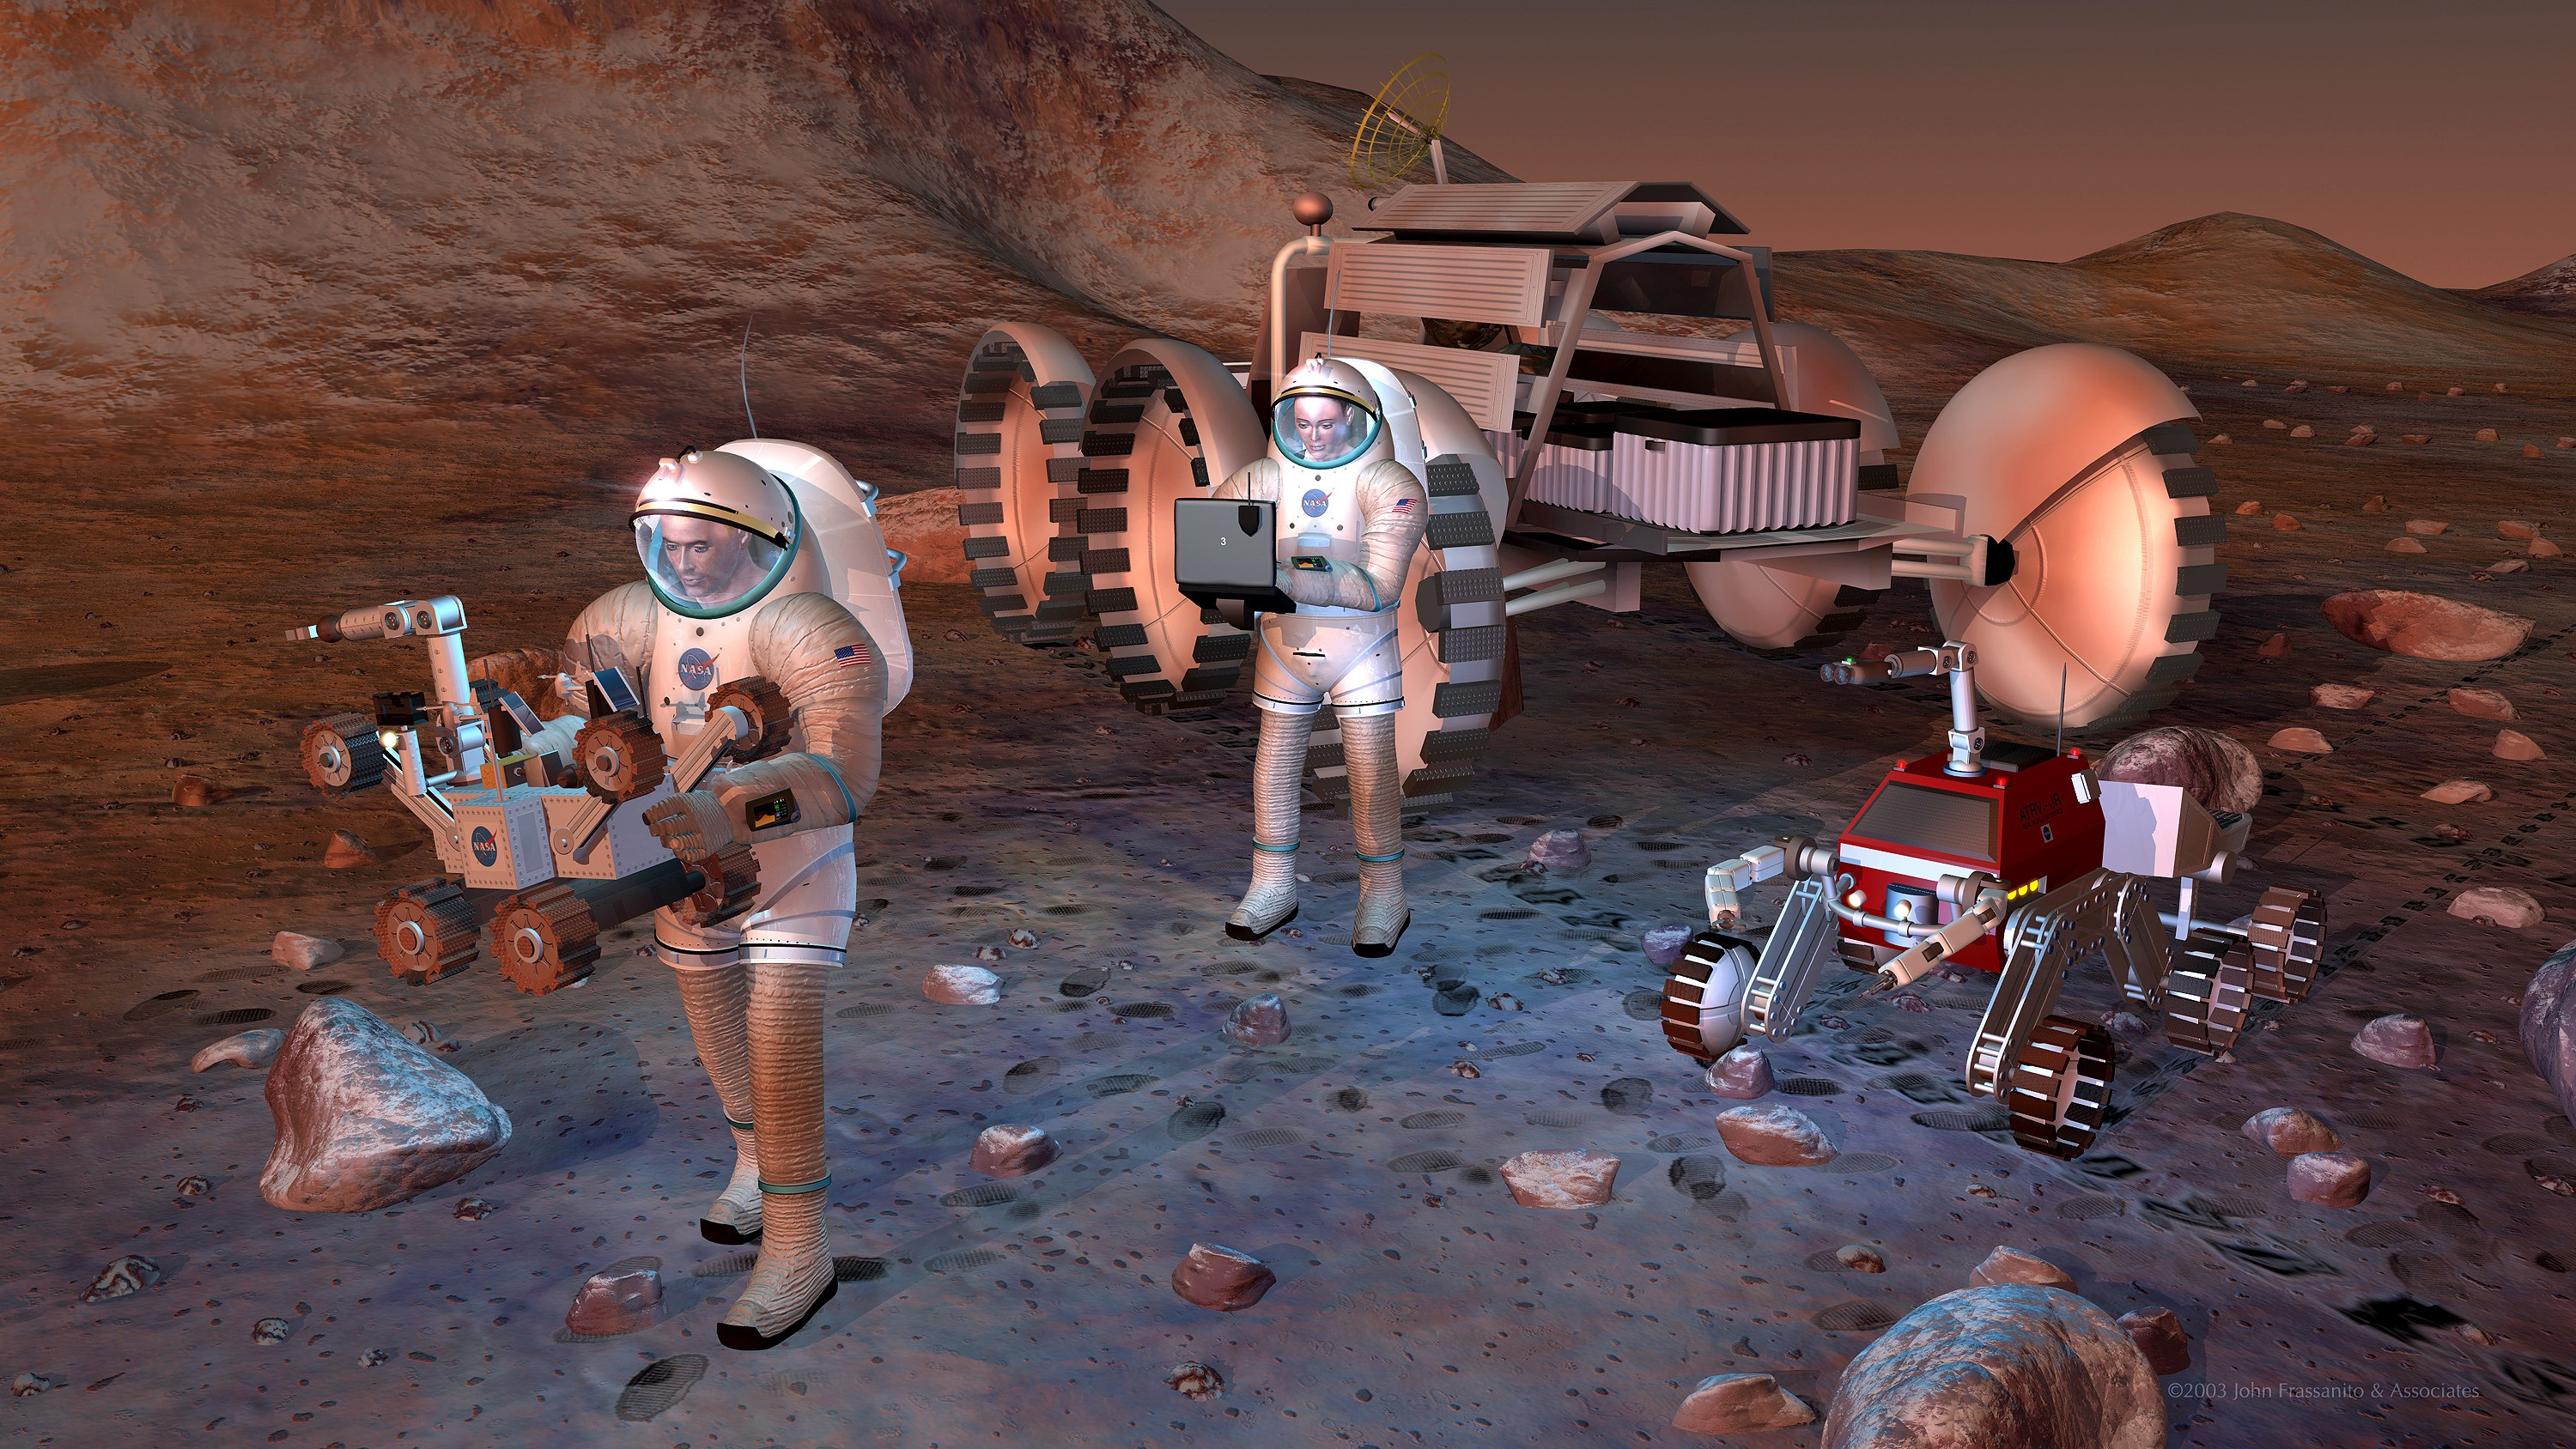 future human travel to mars